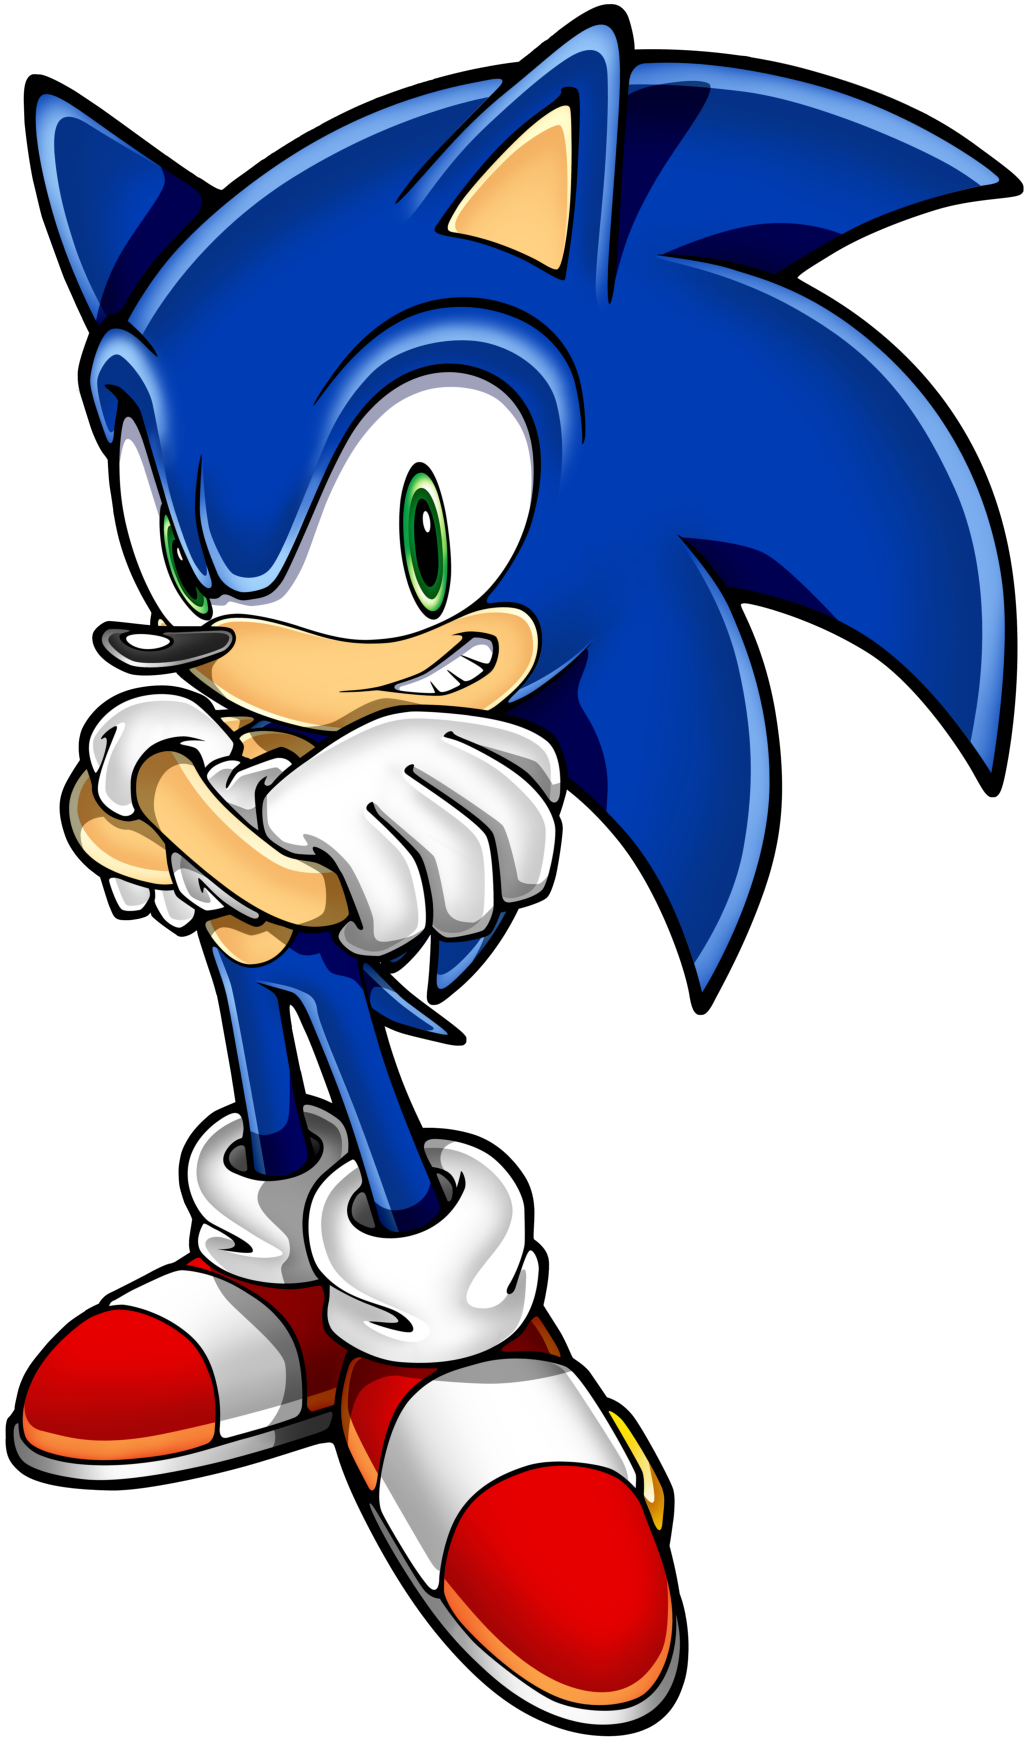 Sonic The Hedgehog Png 11 Png Image - Hedgehog, Transparent background PNG HD thumbnail